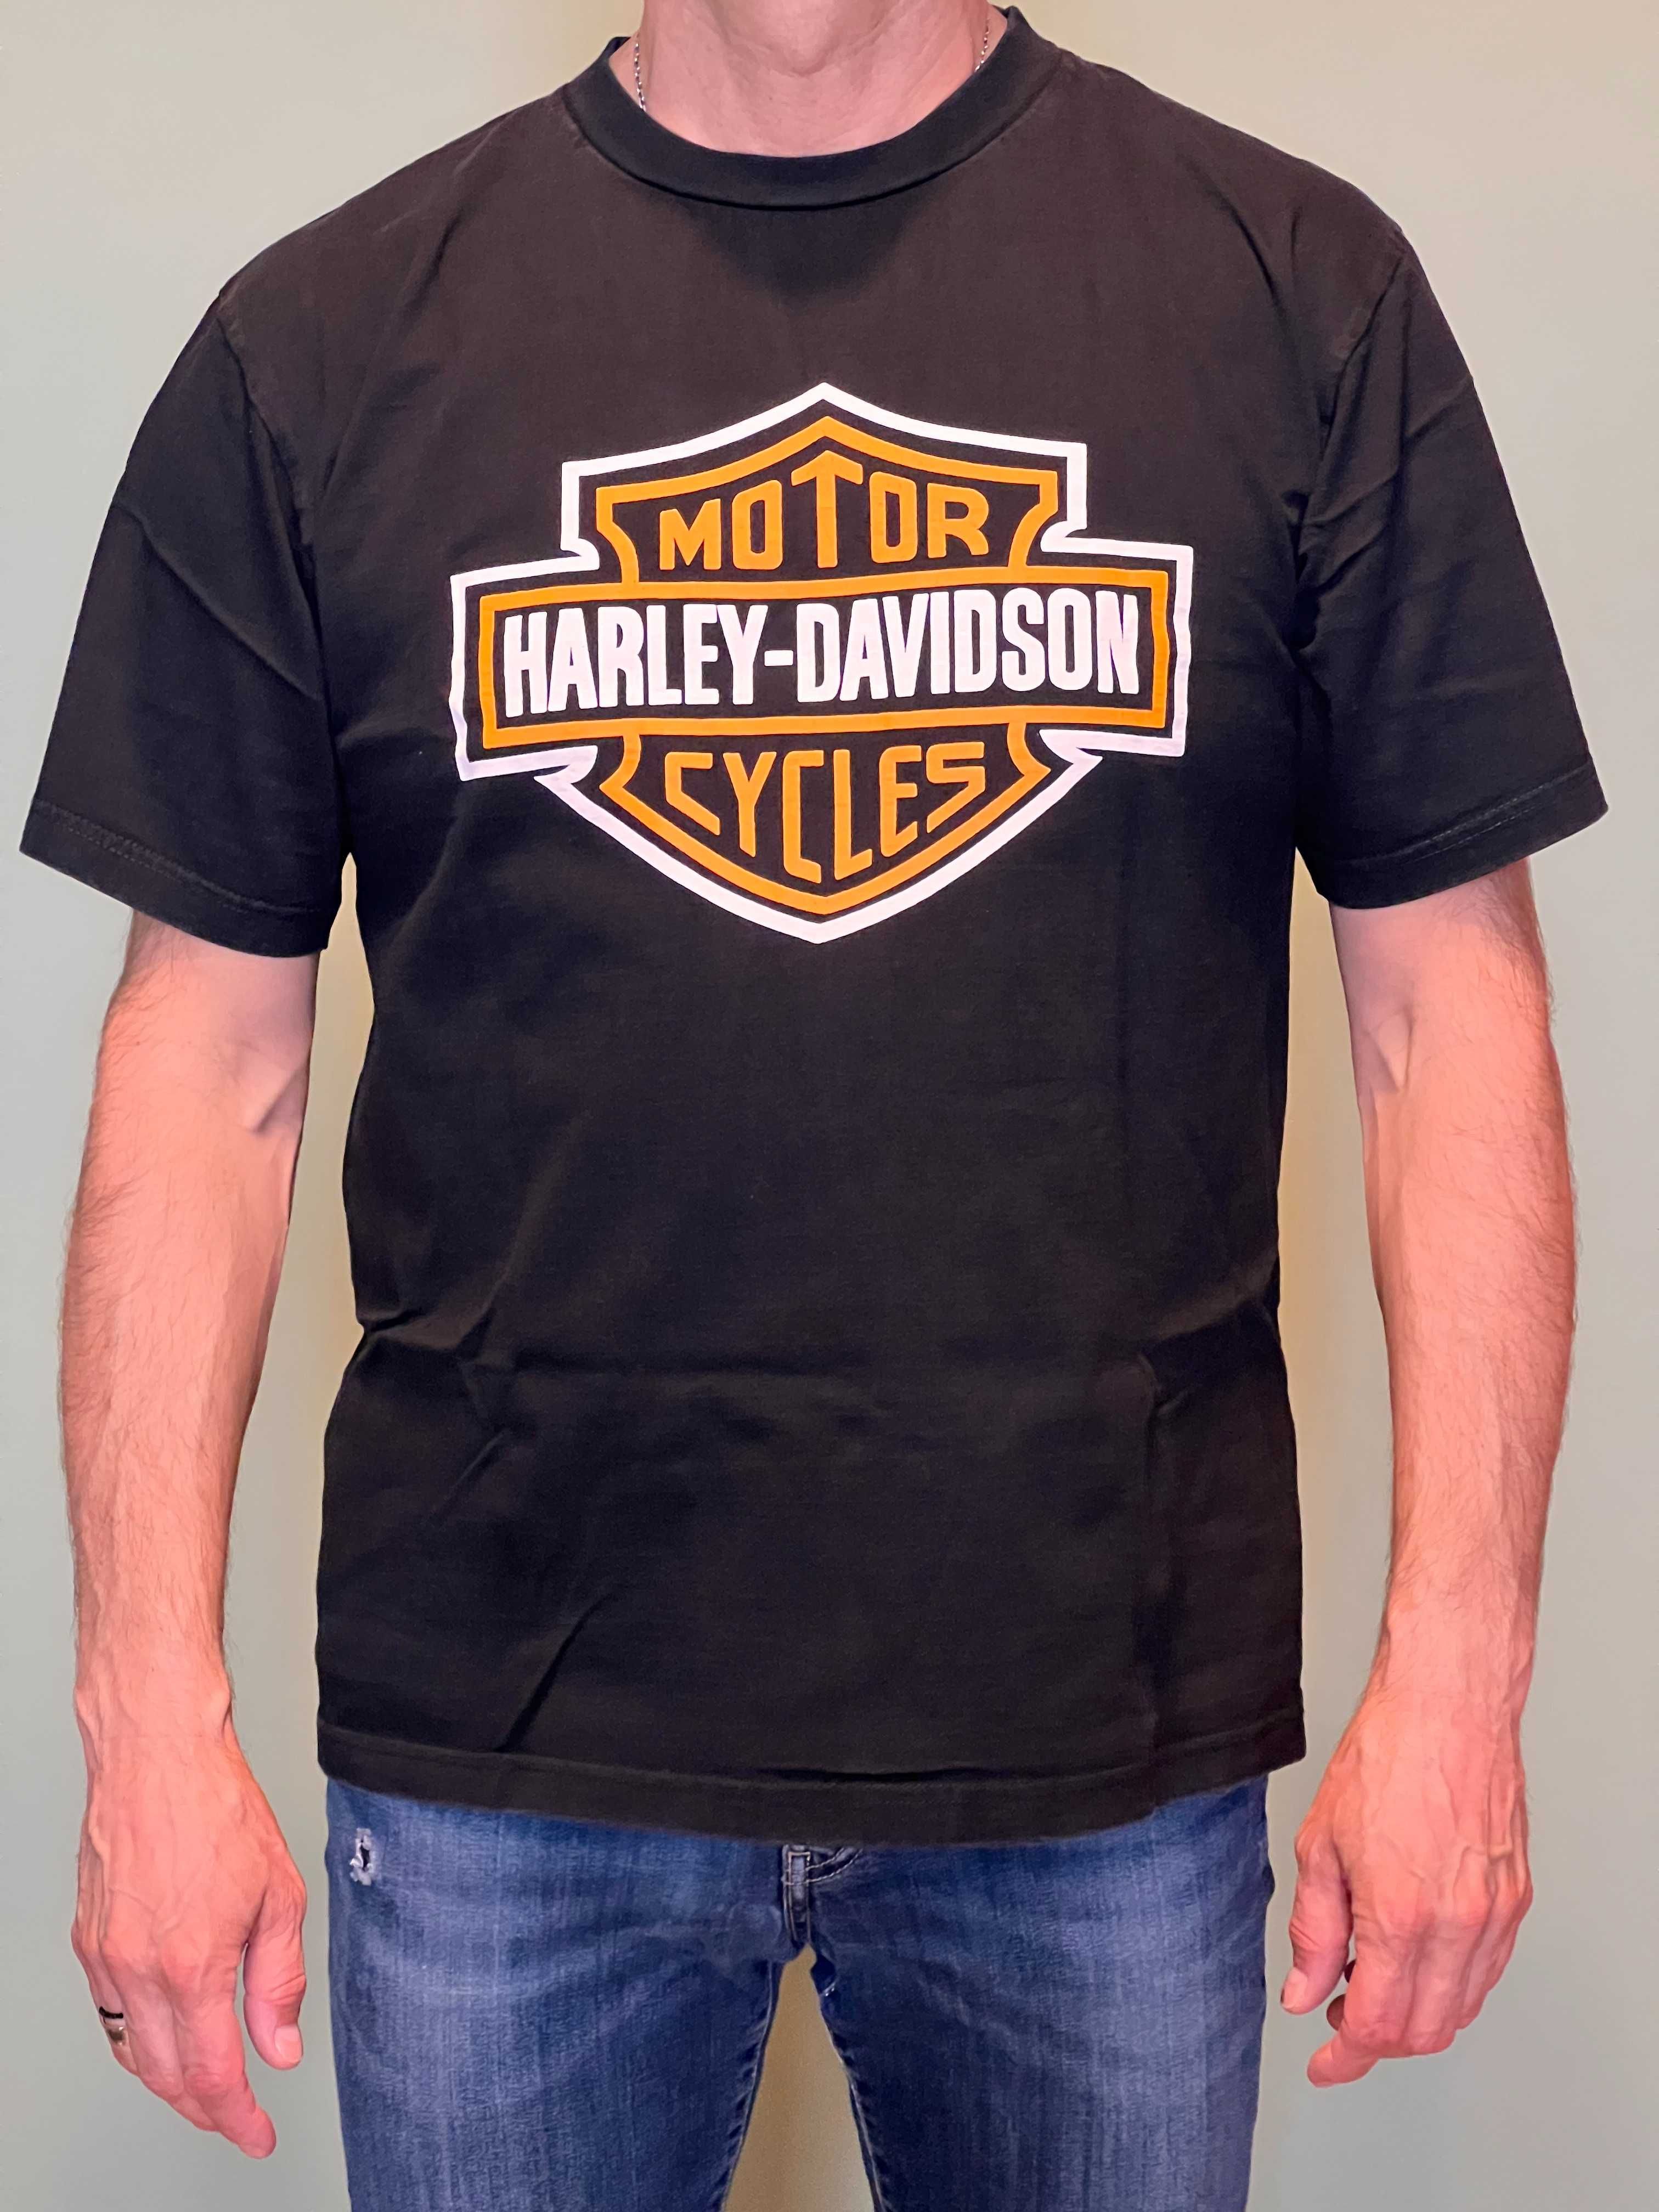 Harley Davidson koszulka oryginał rozm. M